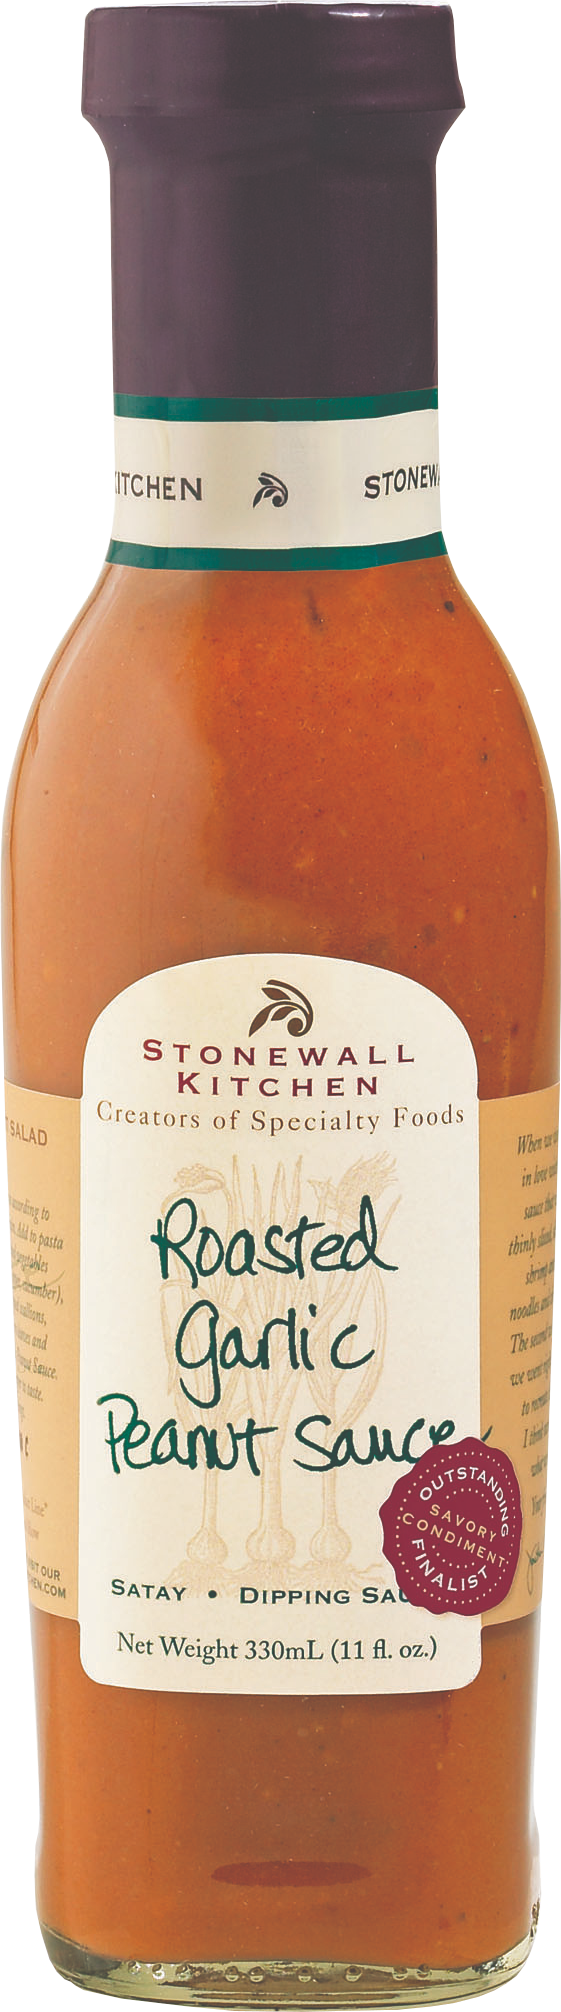 Stonewall Roasted Garlic Peanut Sauce 330 ml